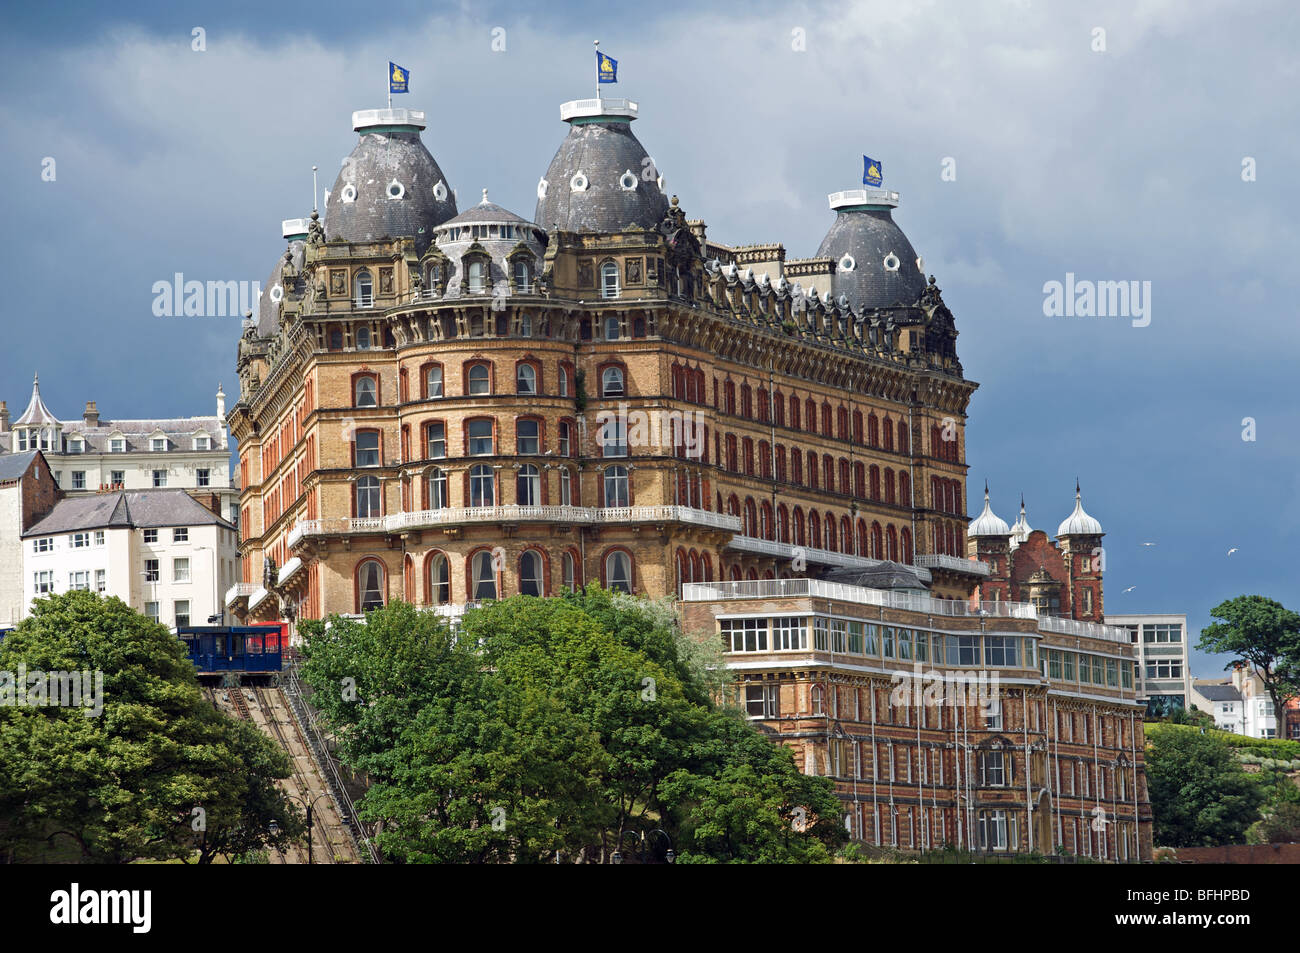 Das Grand Hotel Scarborough North Yorkshire England Stockfotografie Alamy